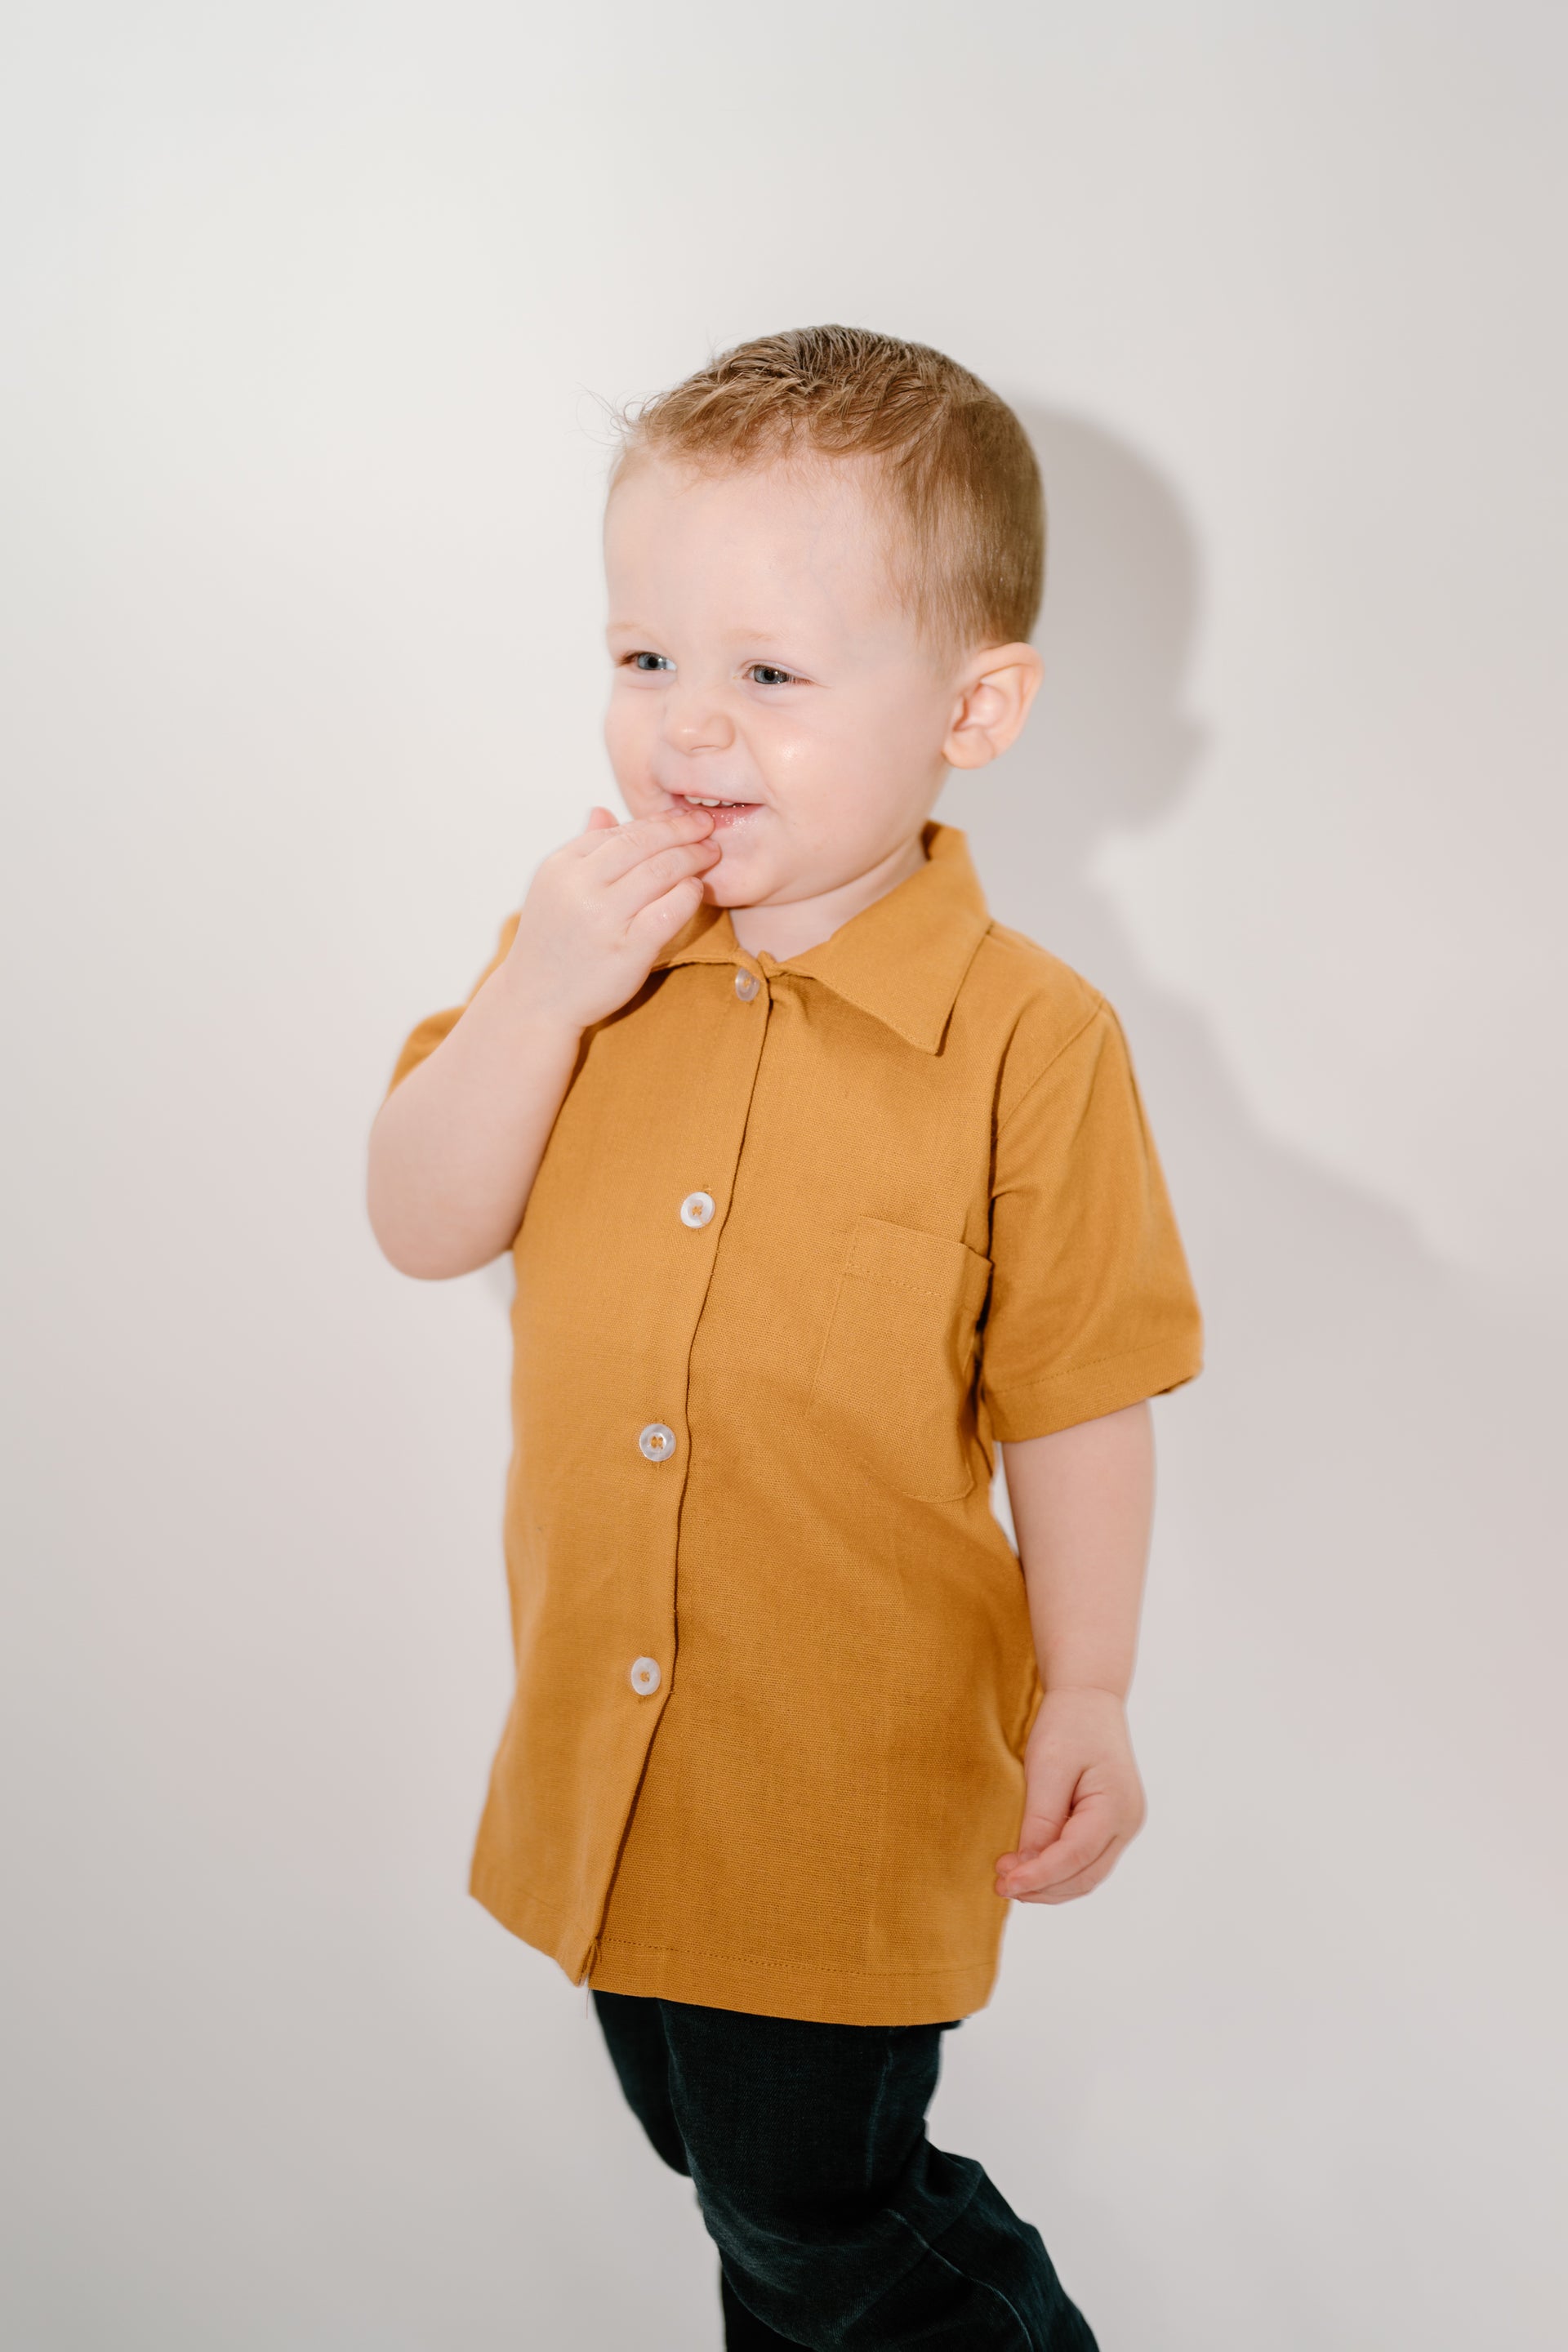 Boy wearing Everett Shirt in mustard